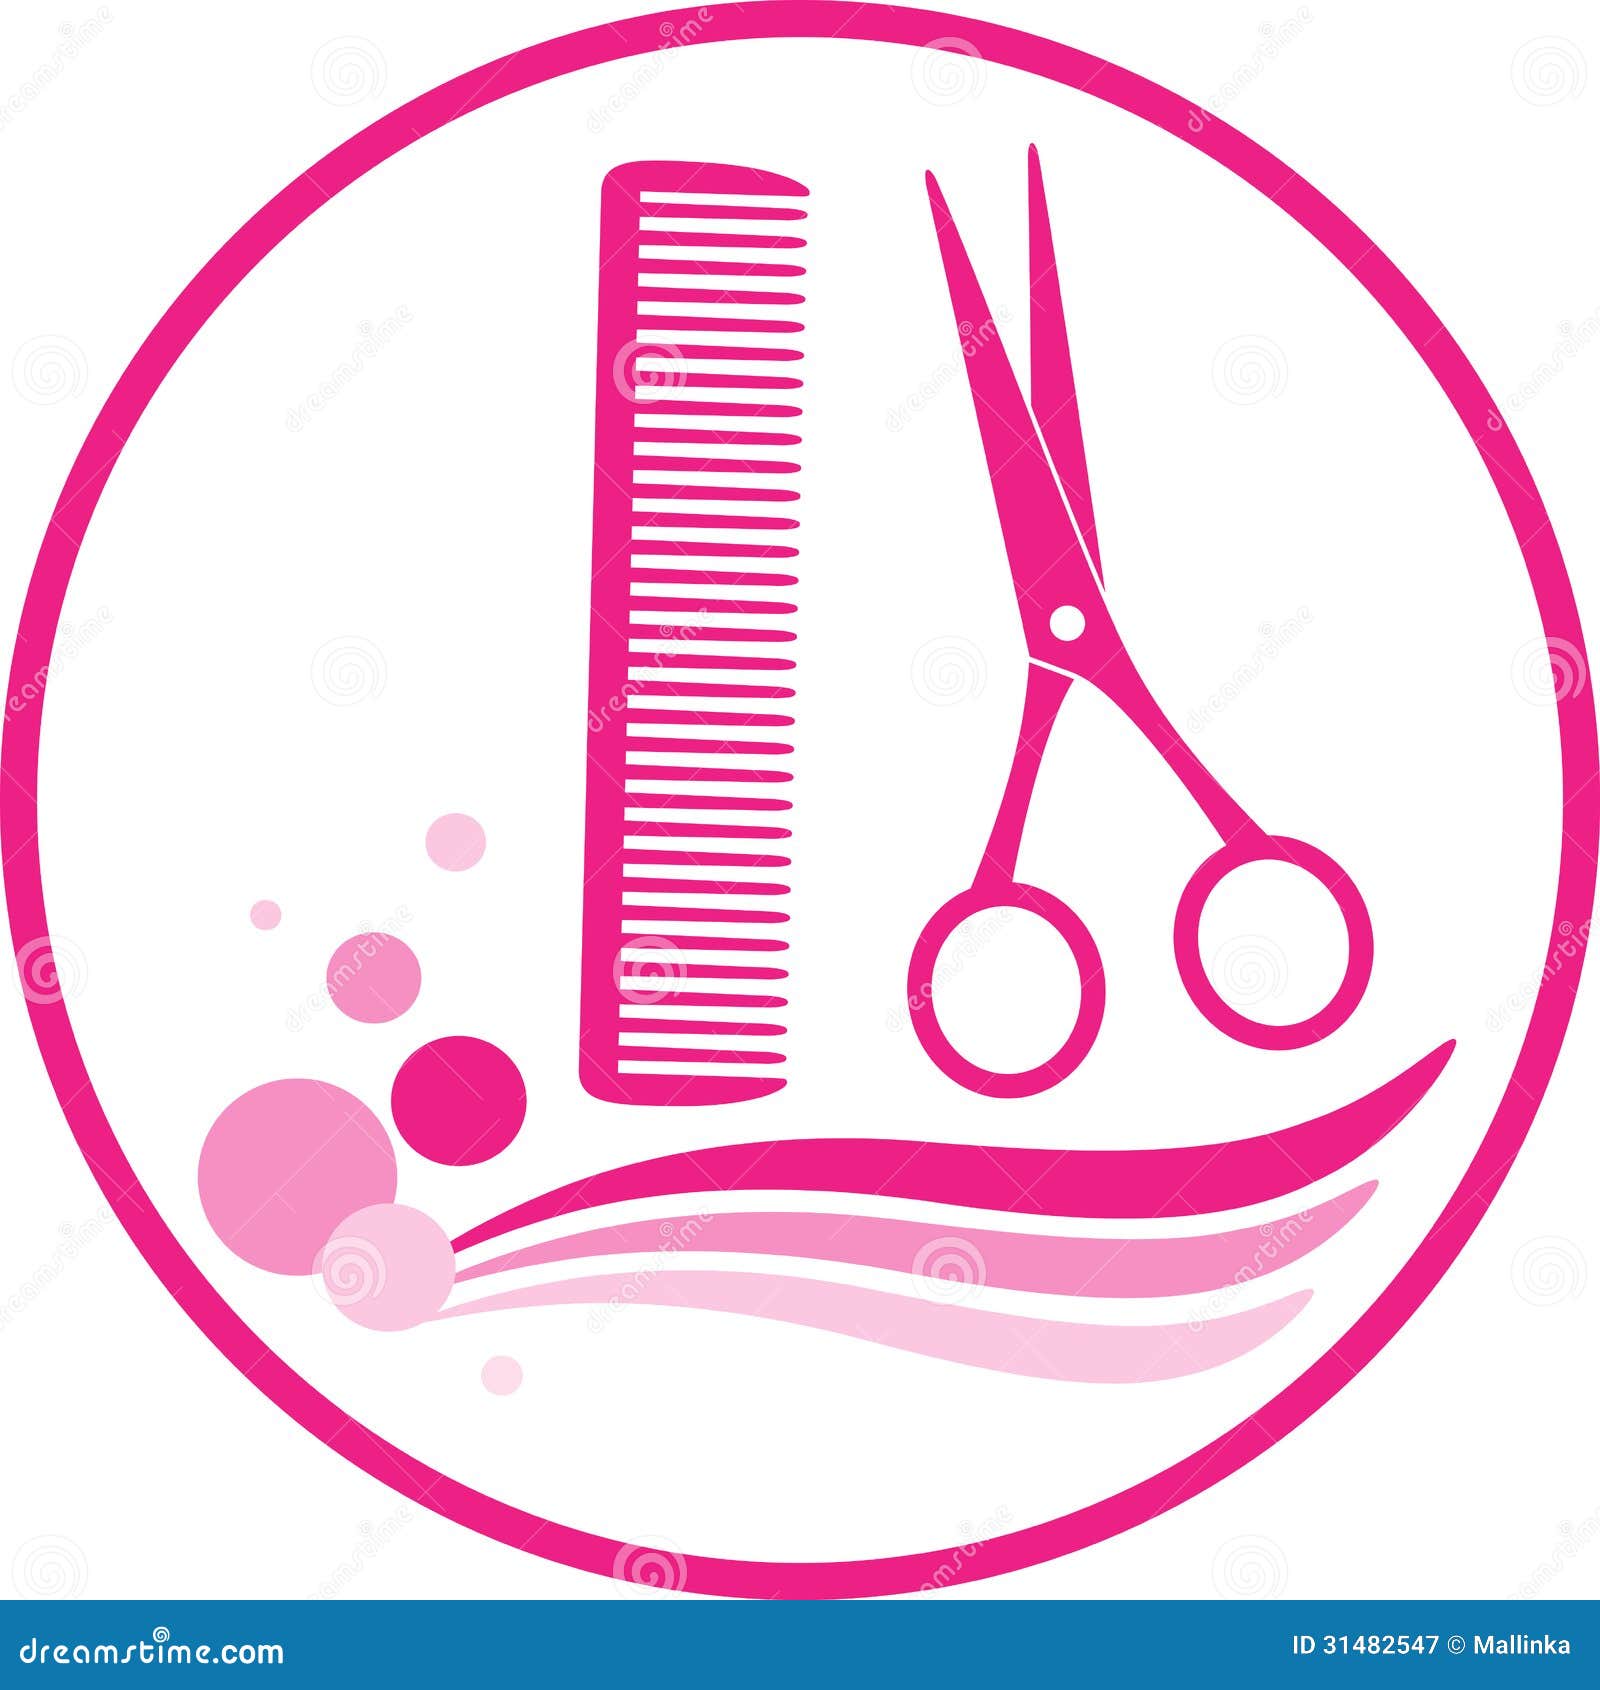 sign scissors comb hairdresser white background 31482547